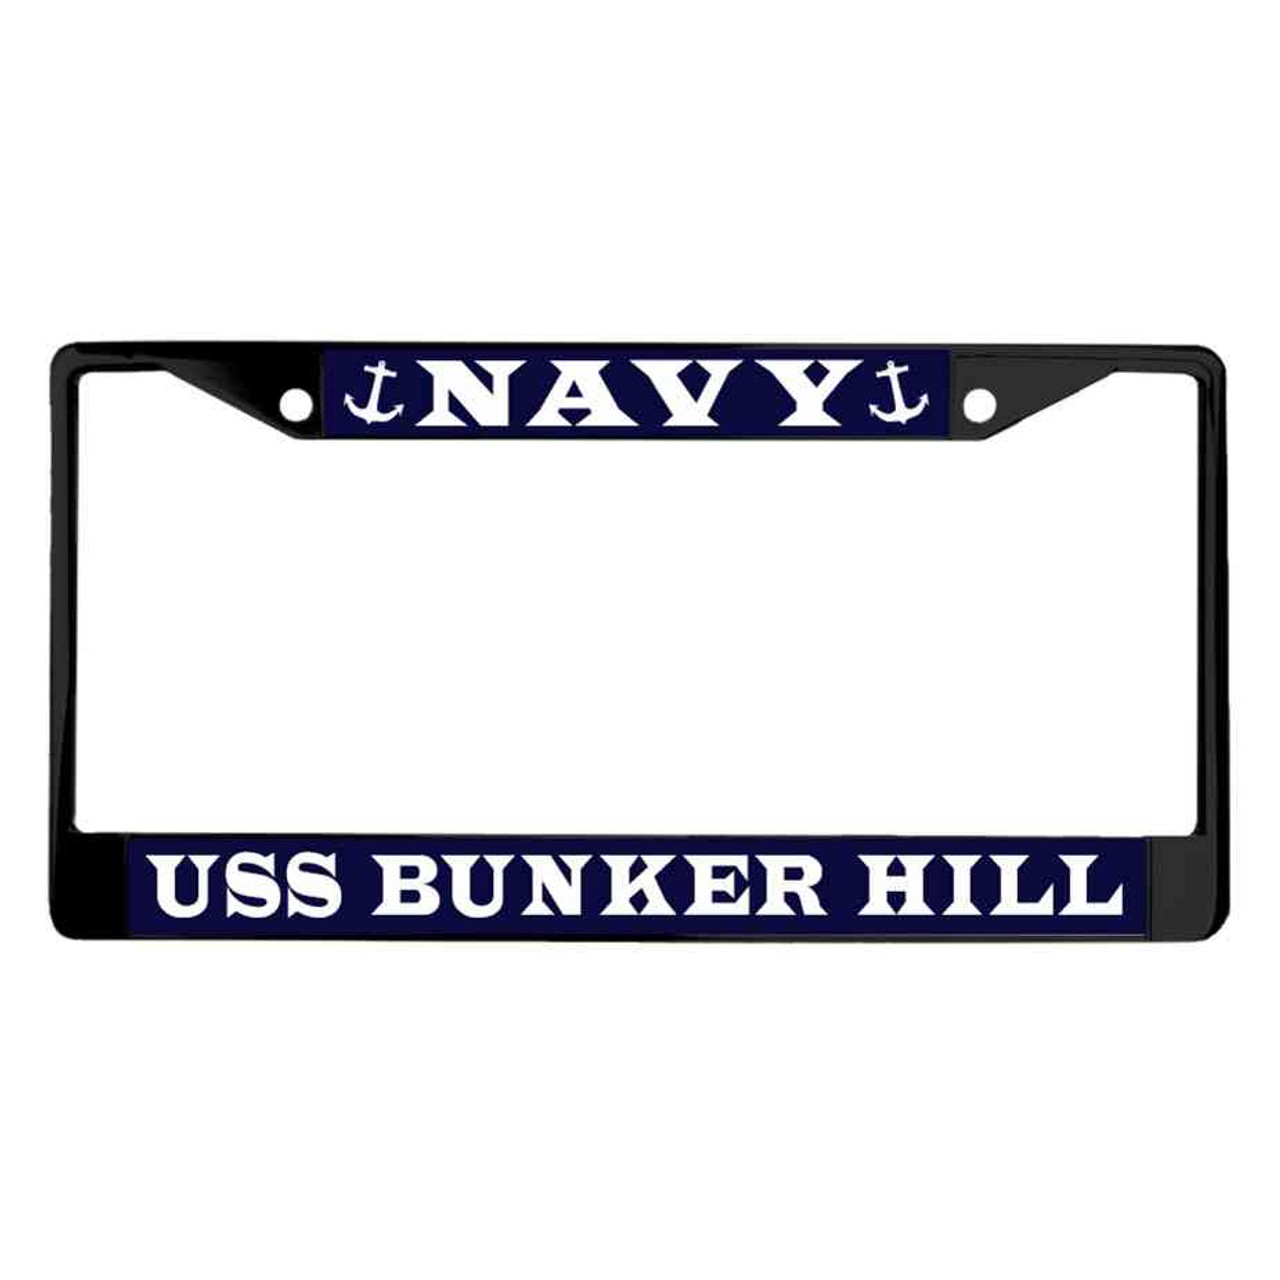 uss bunker hill powder coated license plate frame